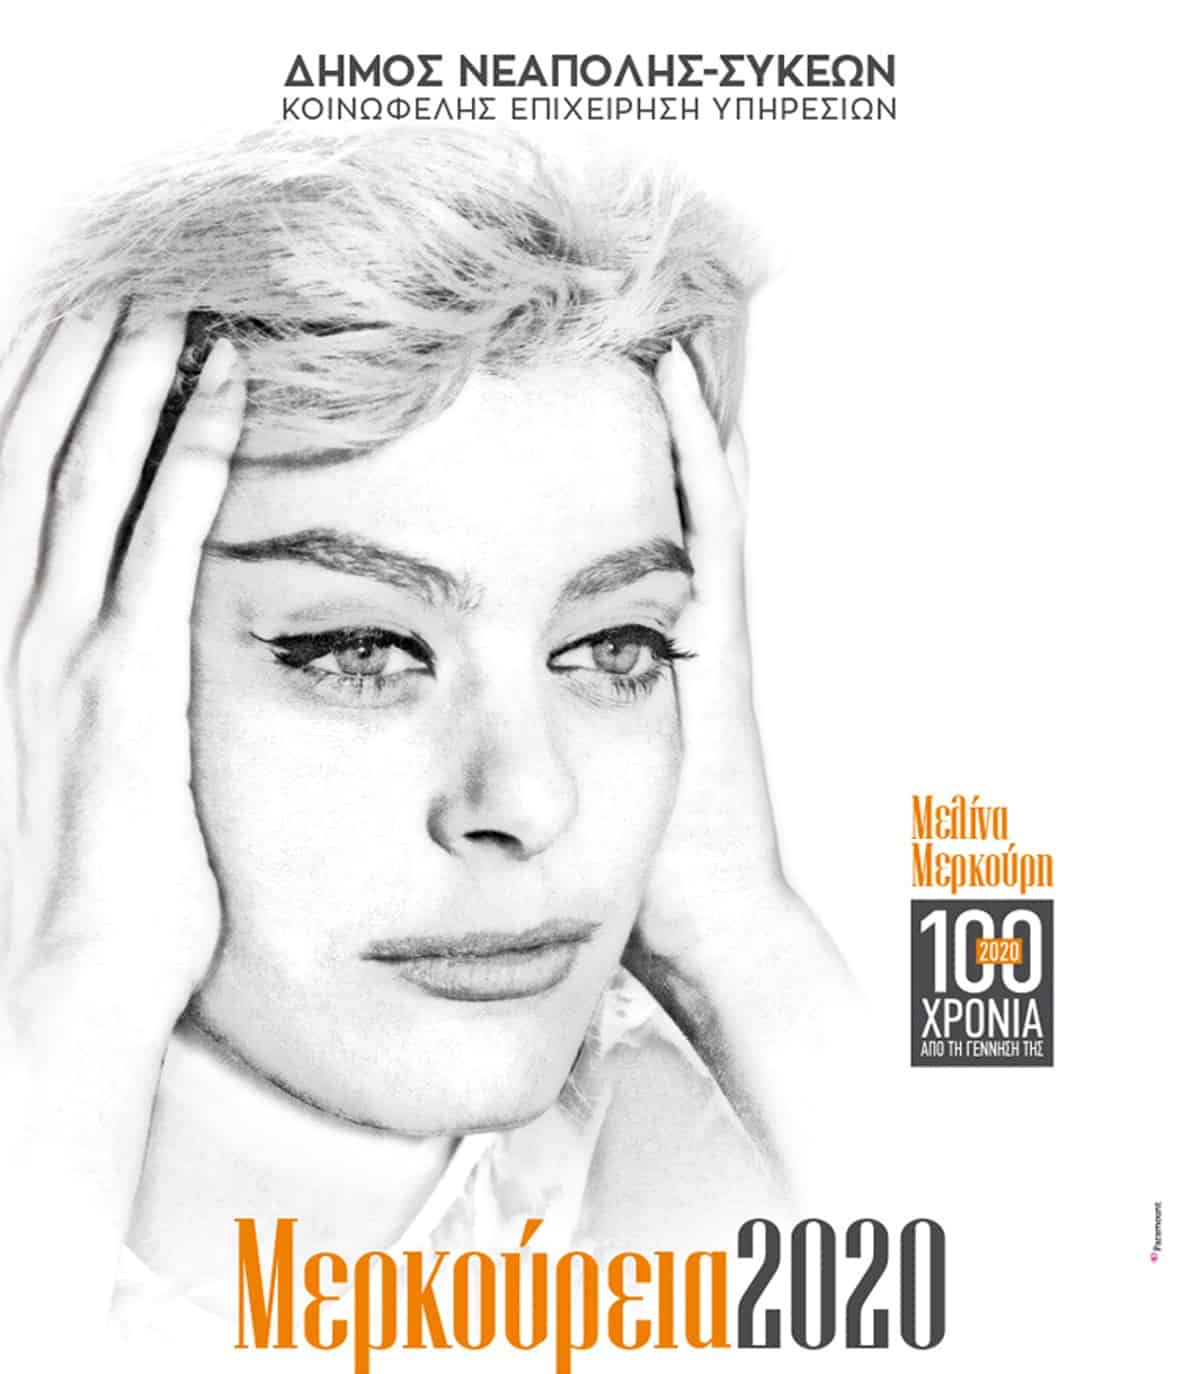 merkoureia 2020 poster